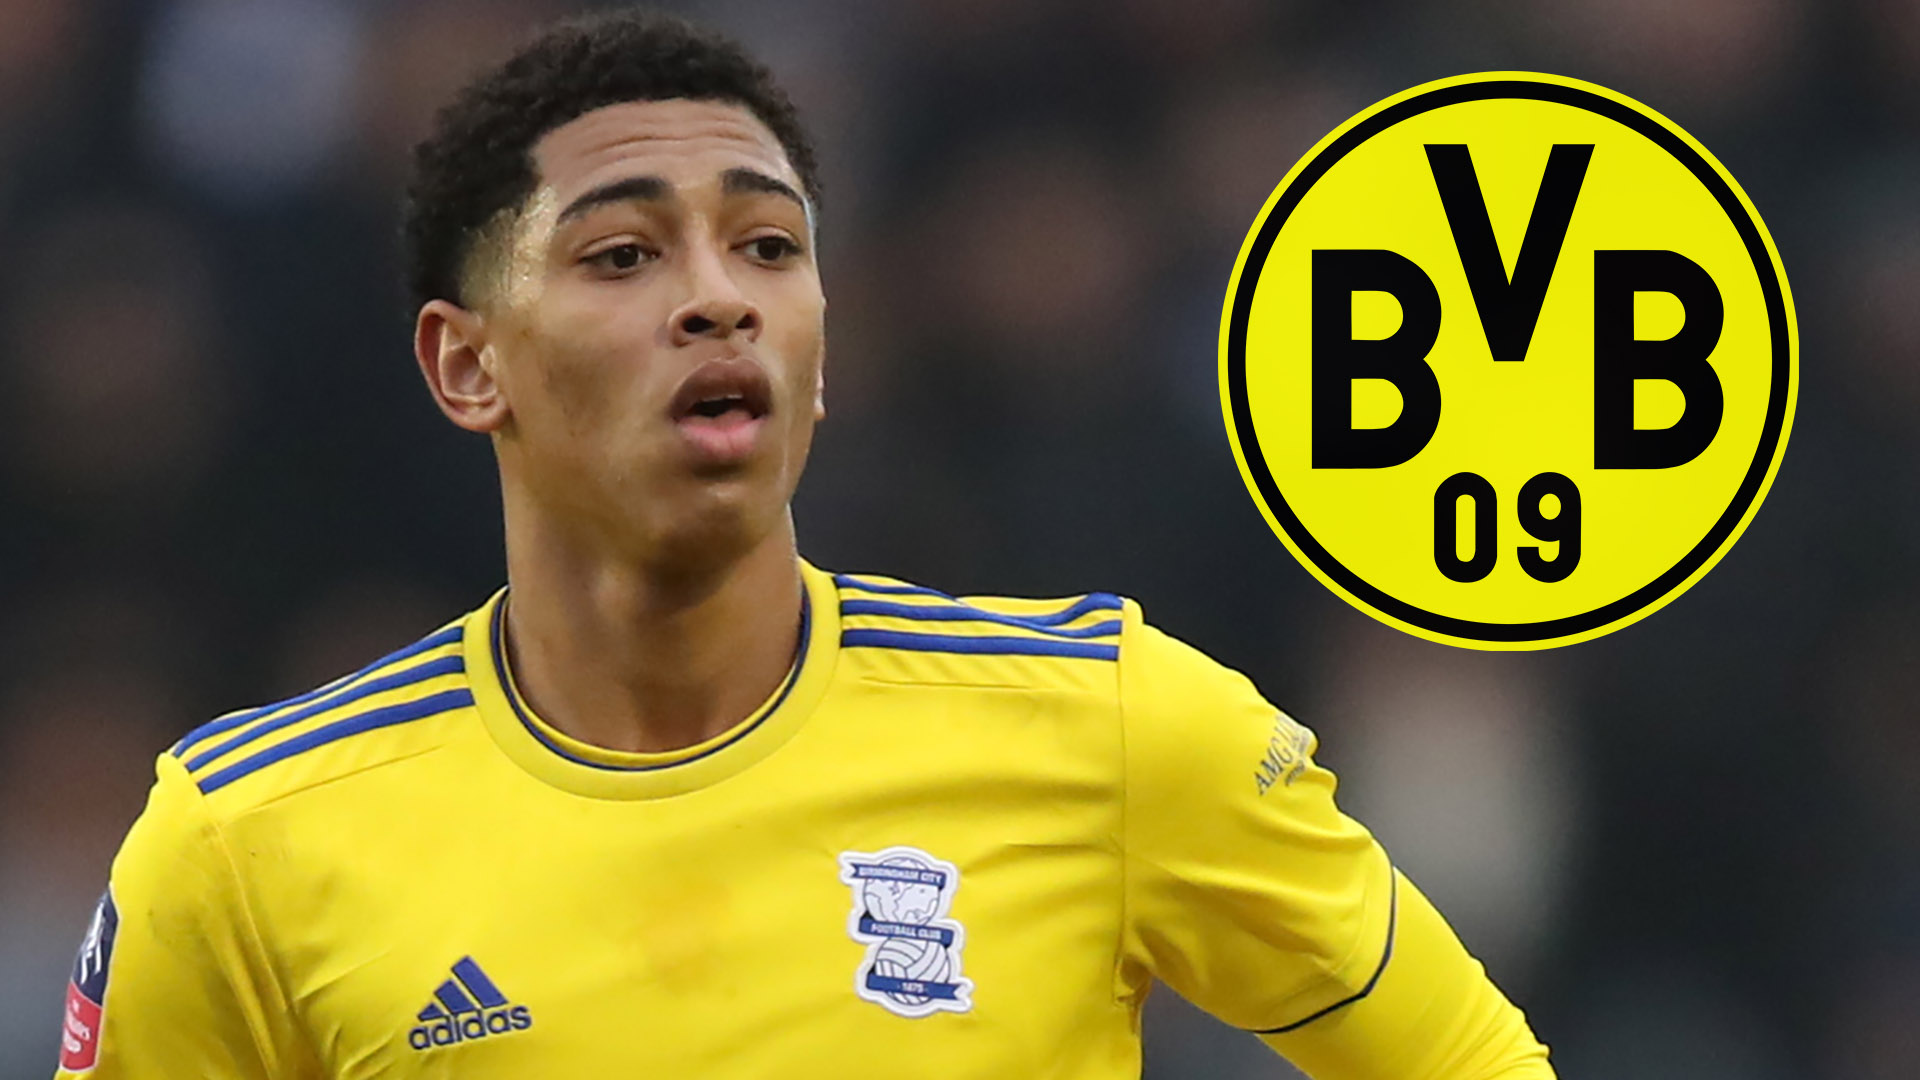 Jude Bellingham completes move to Borussia Dortmund from Birmingham City